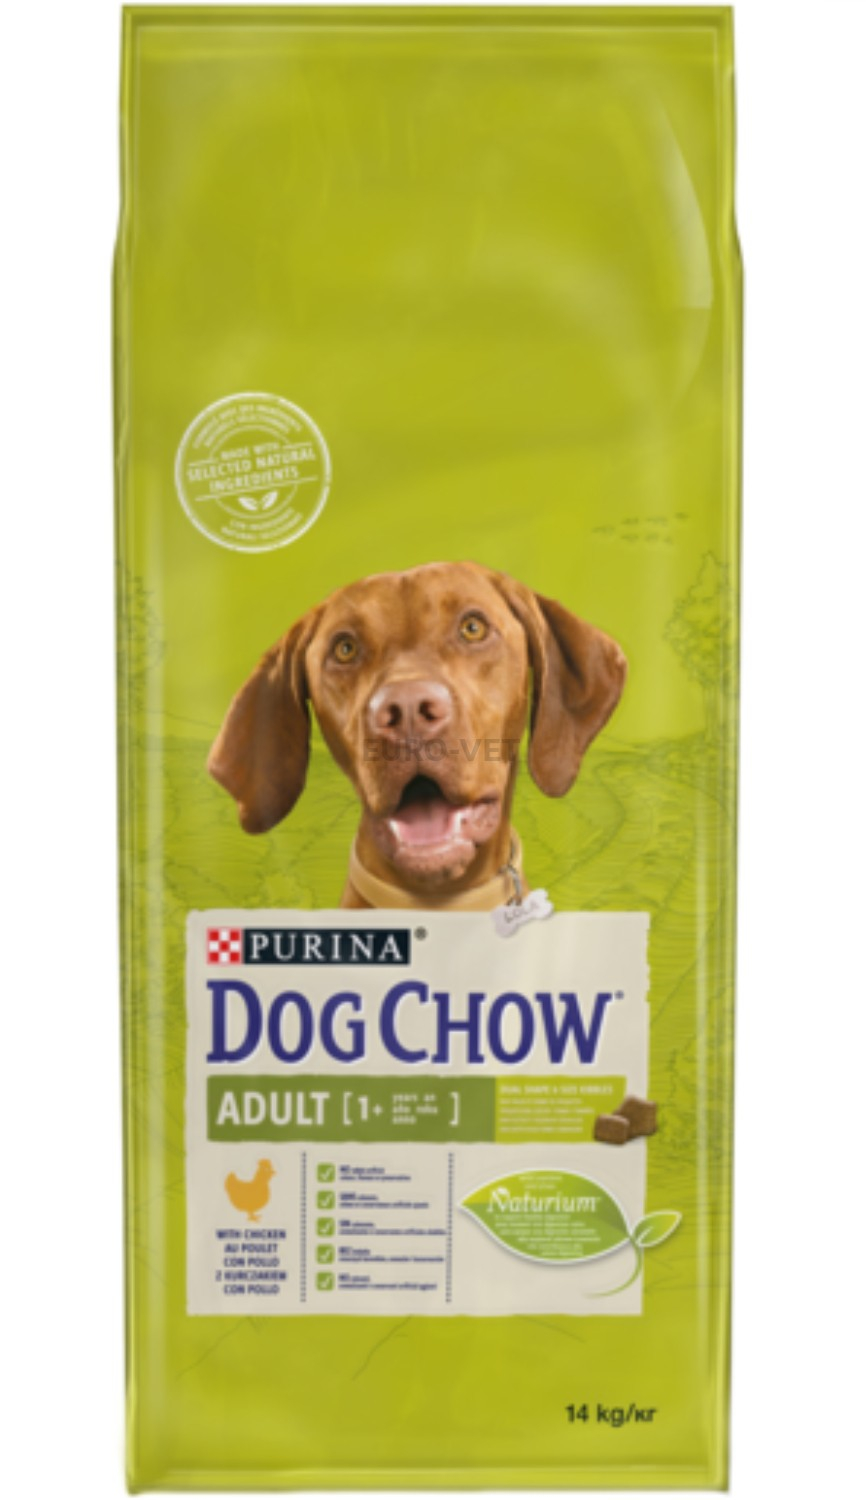 DOG CHOW Adult Pollo pienso para perros